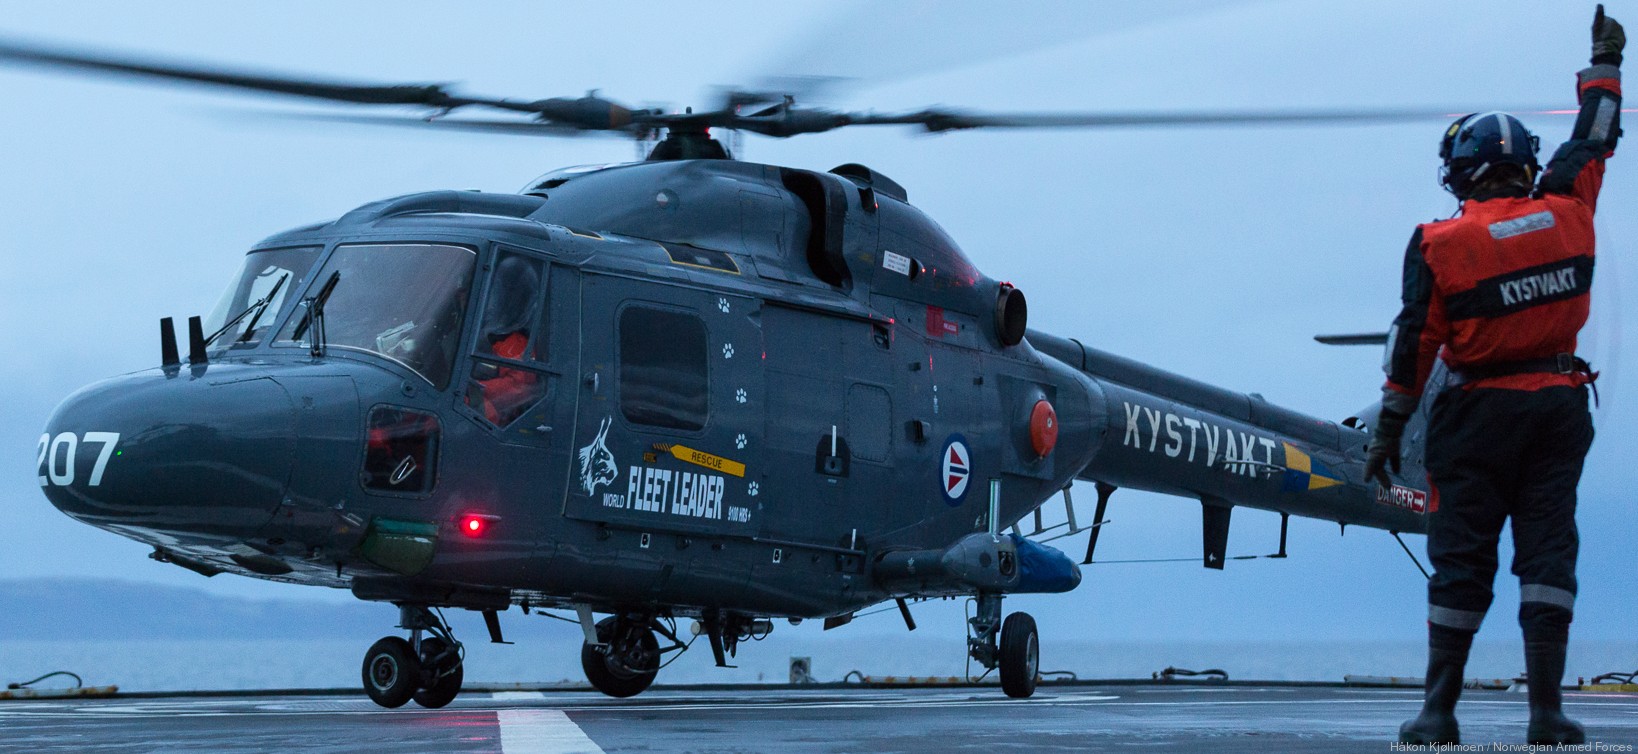 westland lynx mk 86 royal norwegian coast guard navy air force kystvakt 207 02